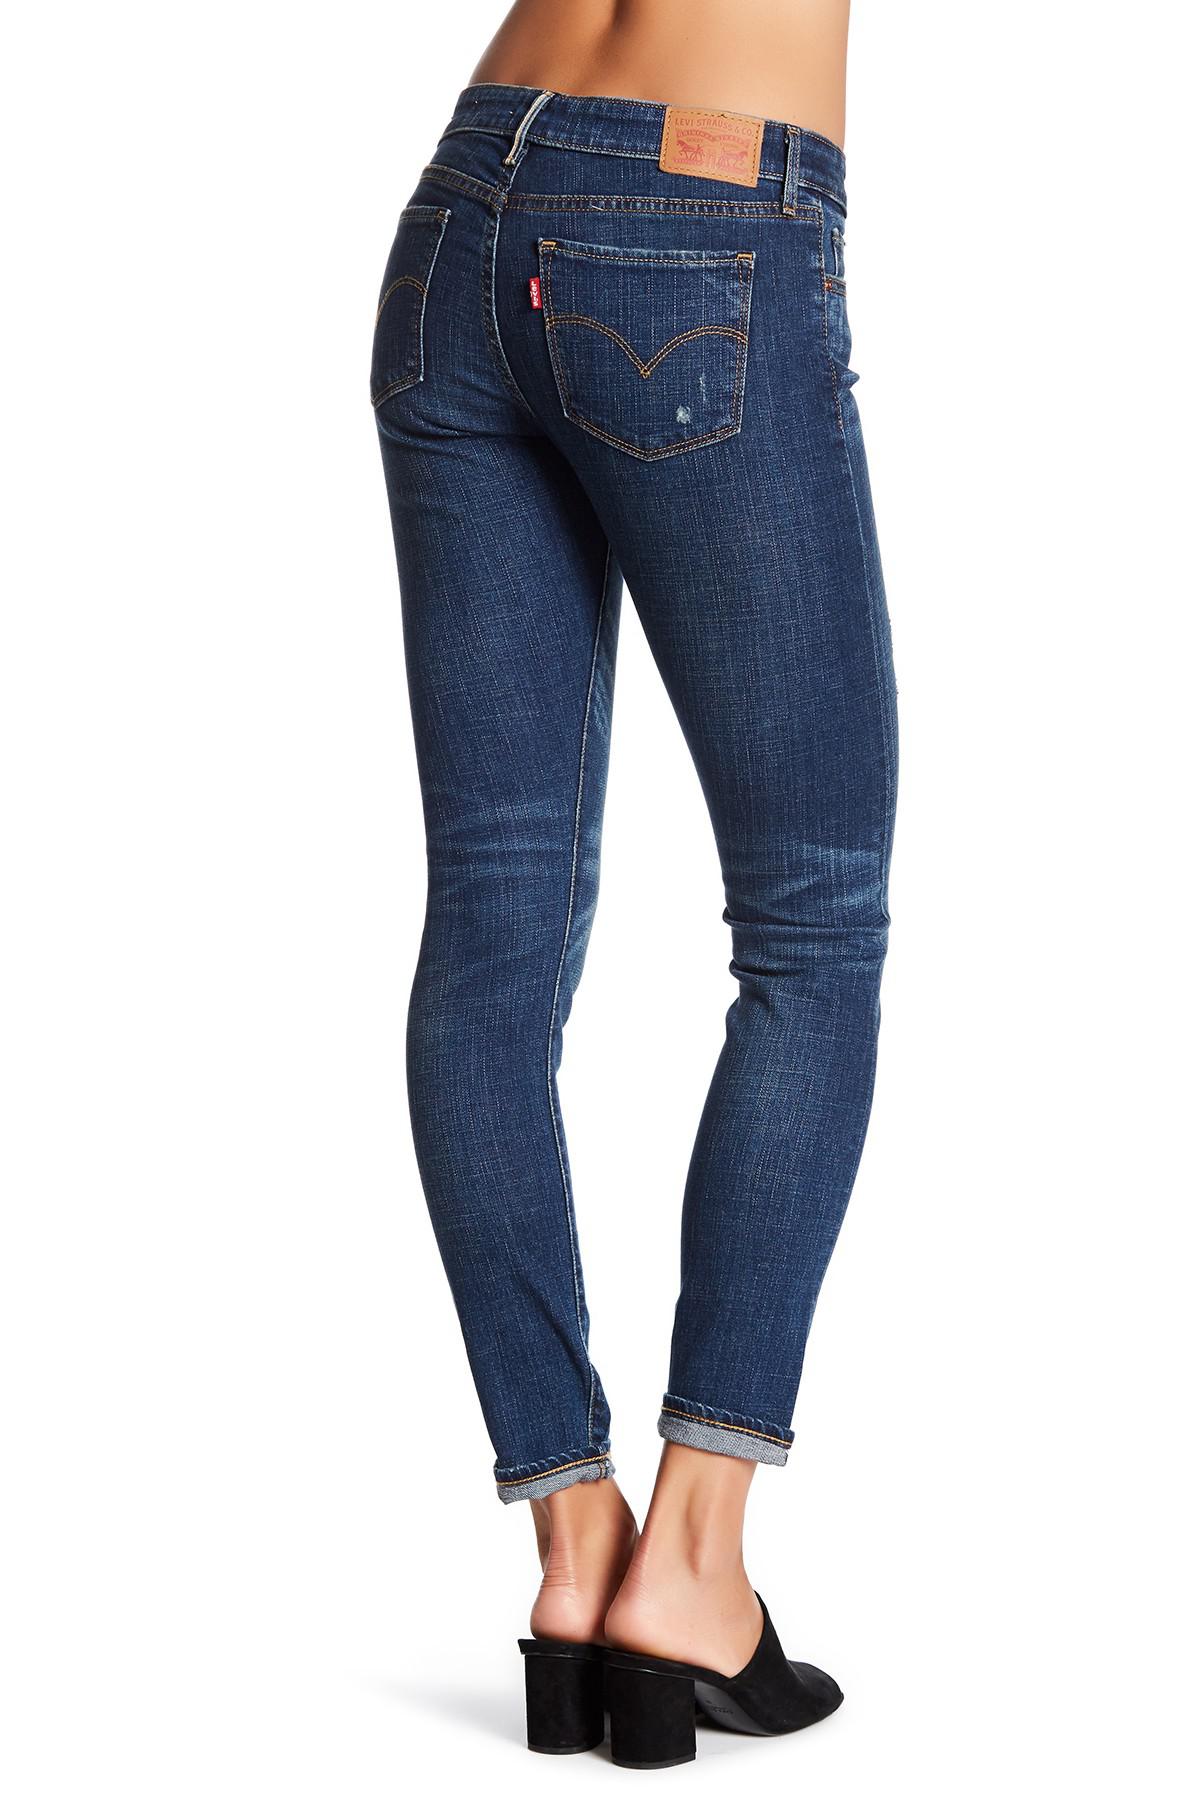 levi's 711 selvedge skinny jeans